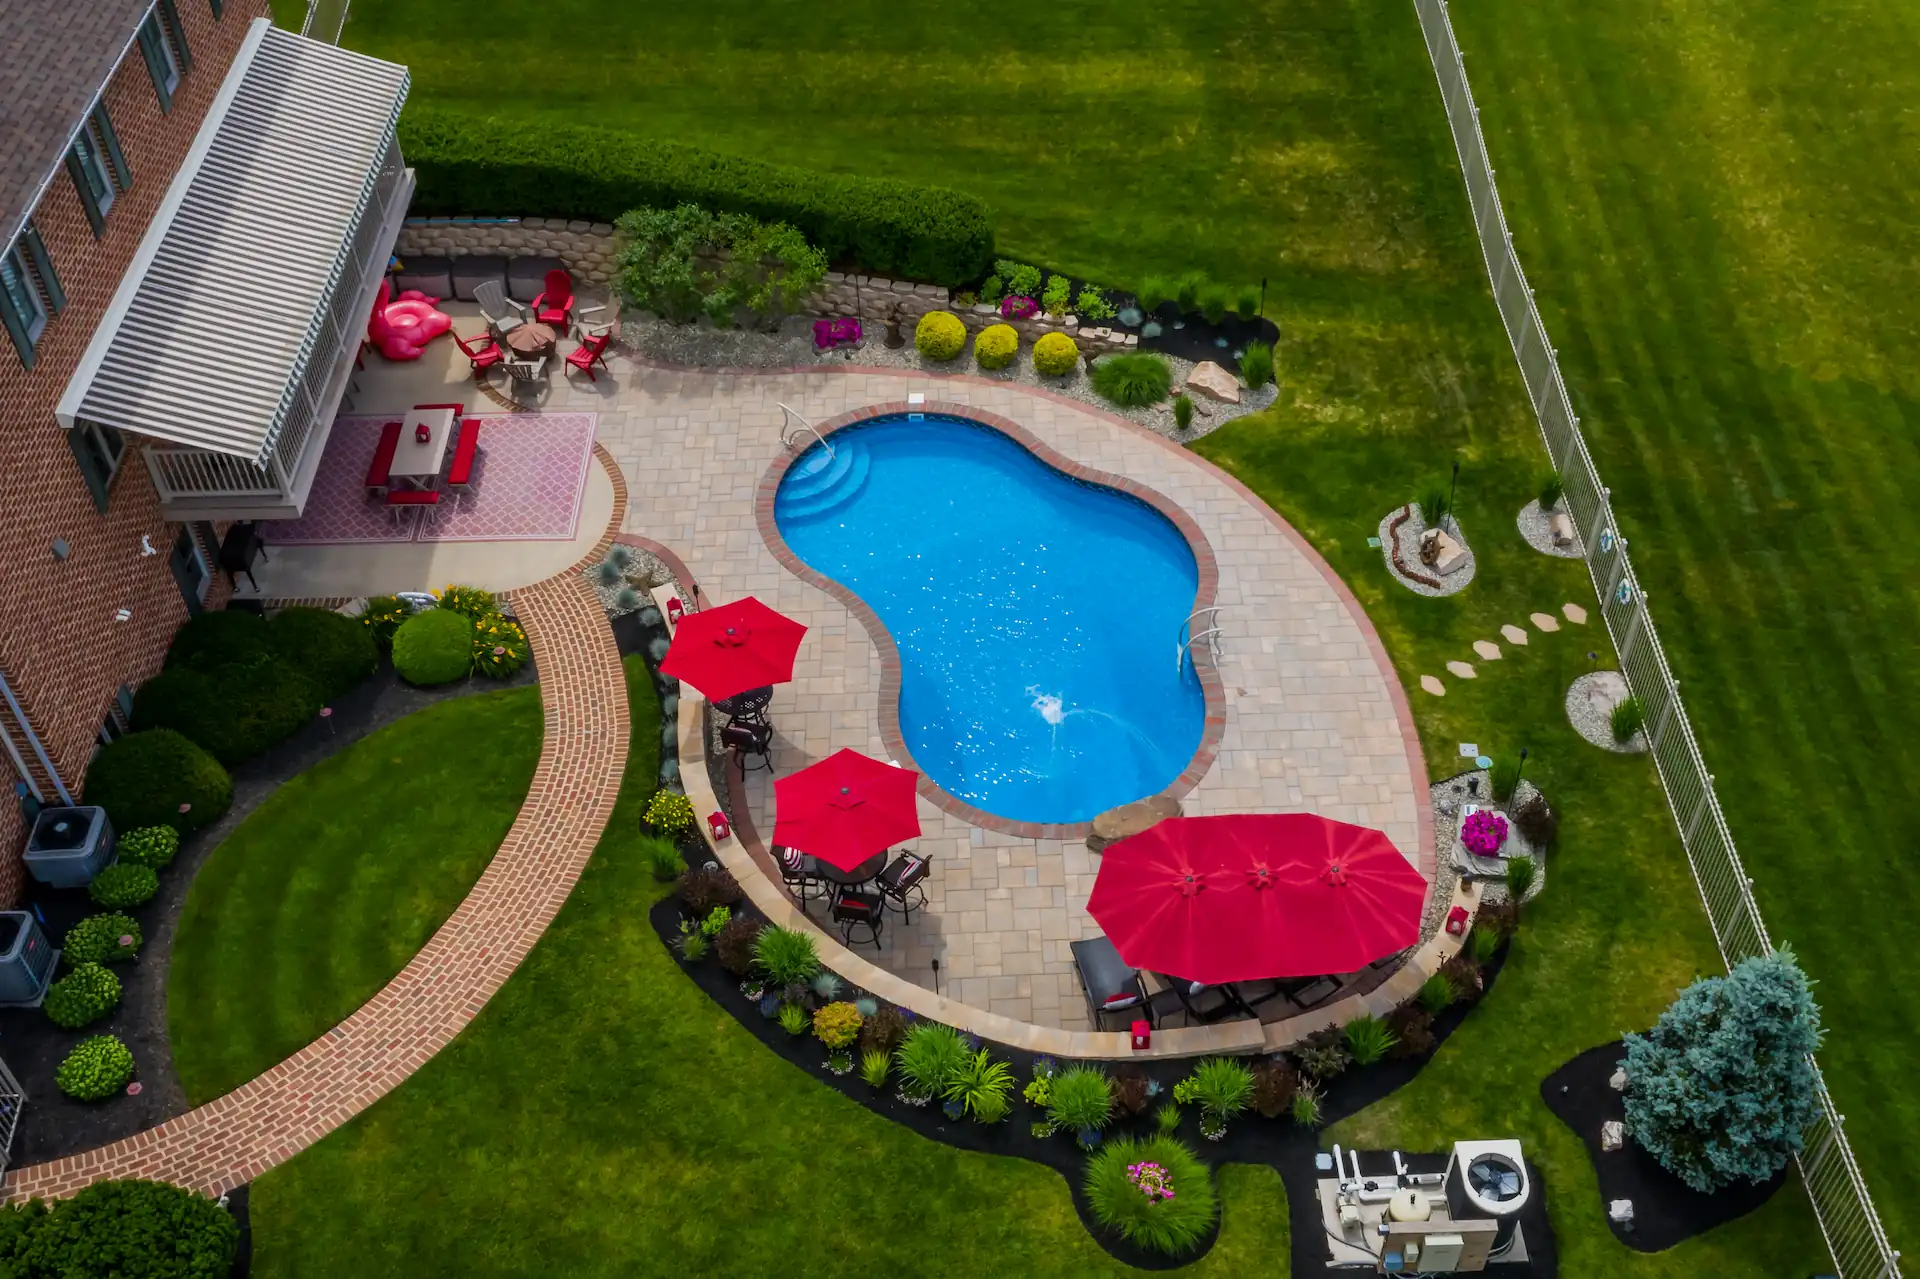 Create a beautiful pool surround.